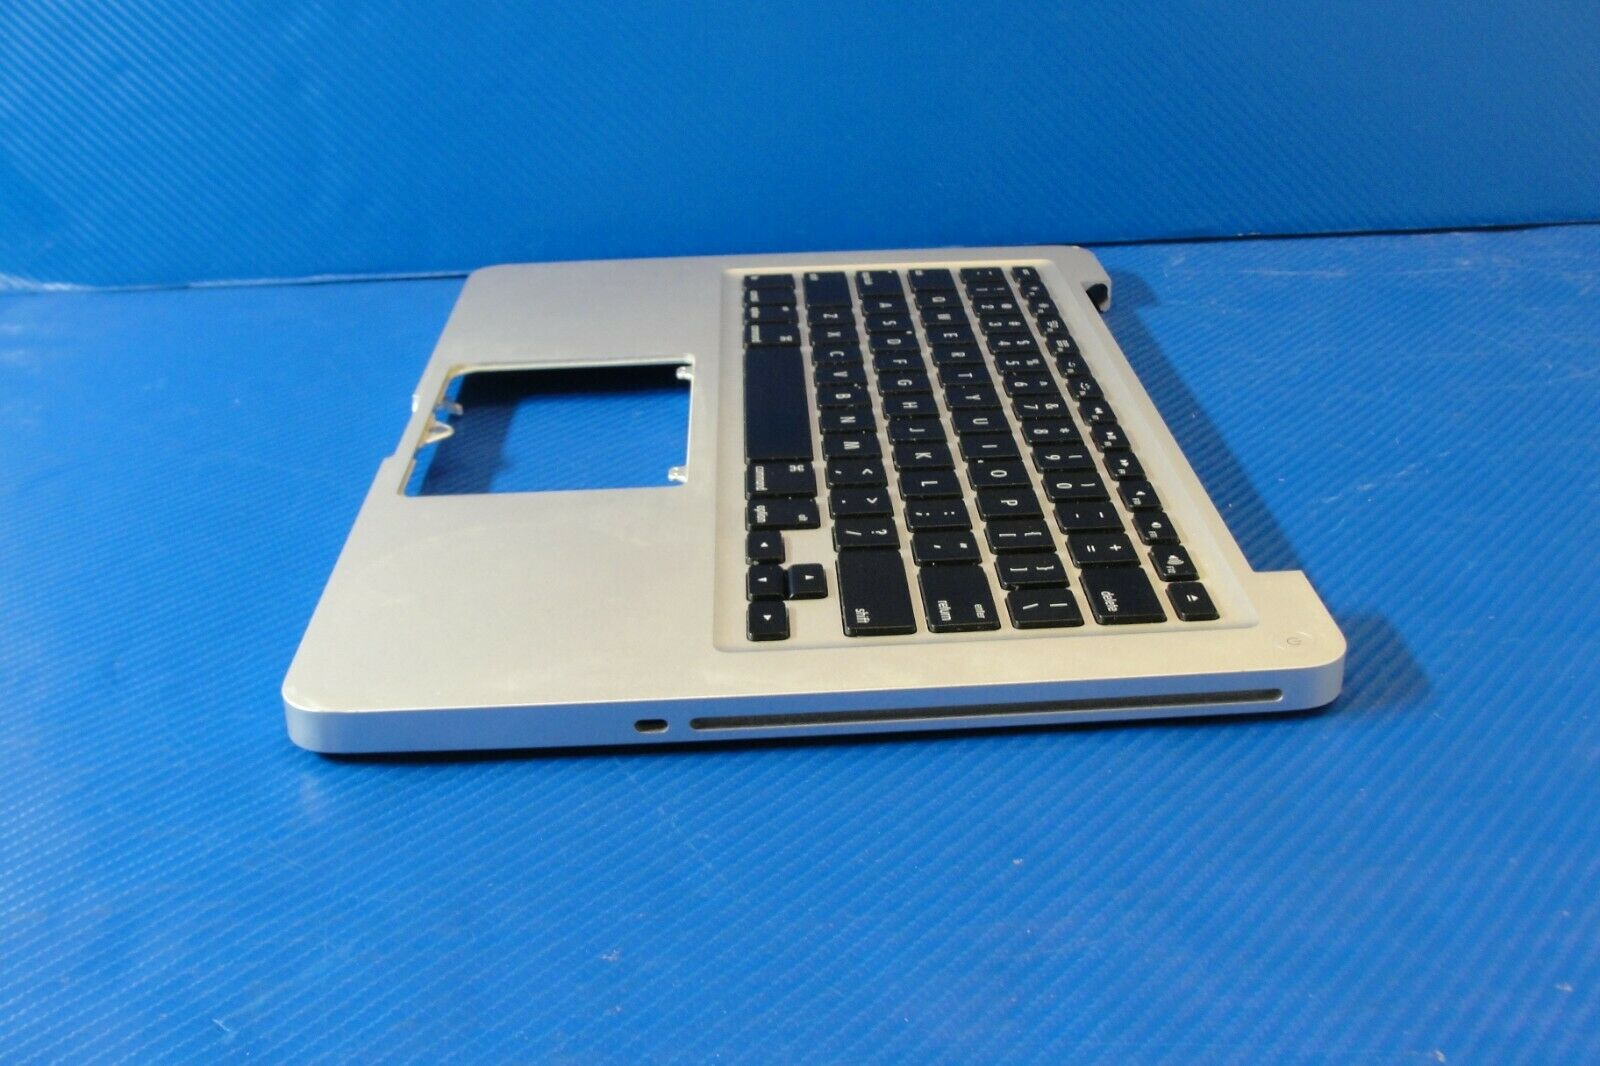 Apple MacBook Pro Unibody 13.3